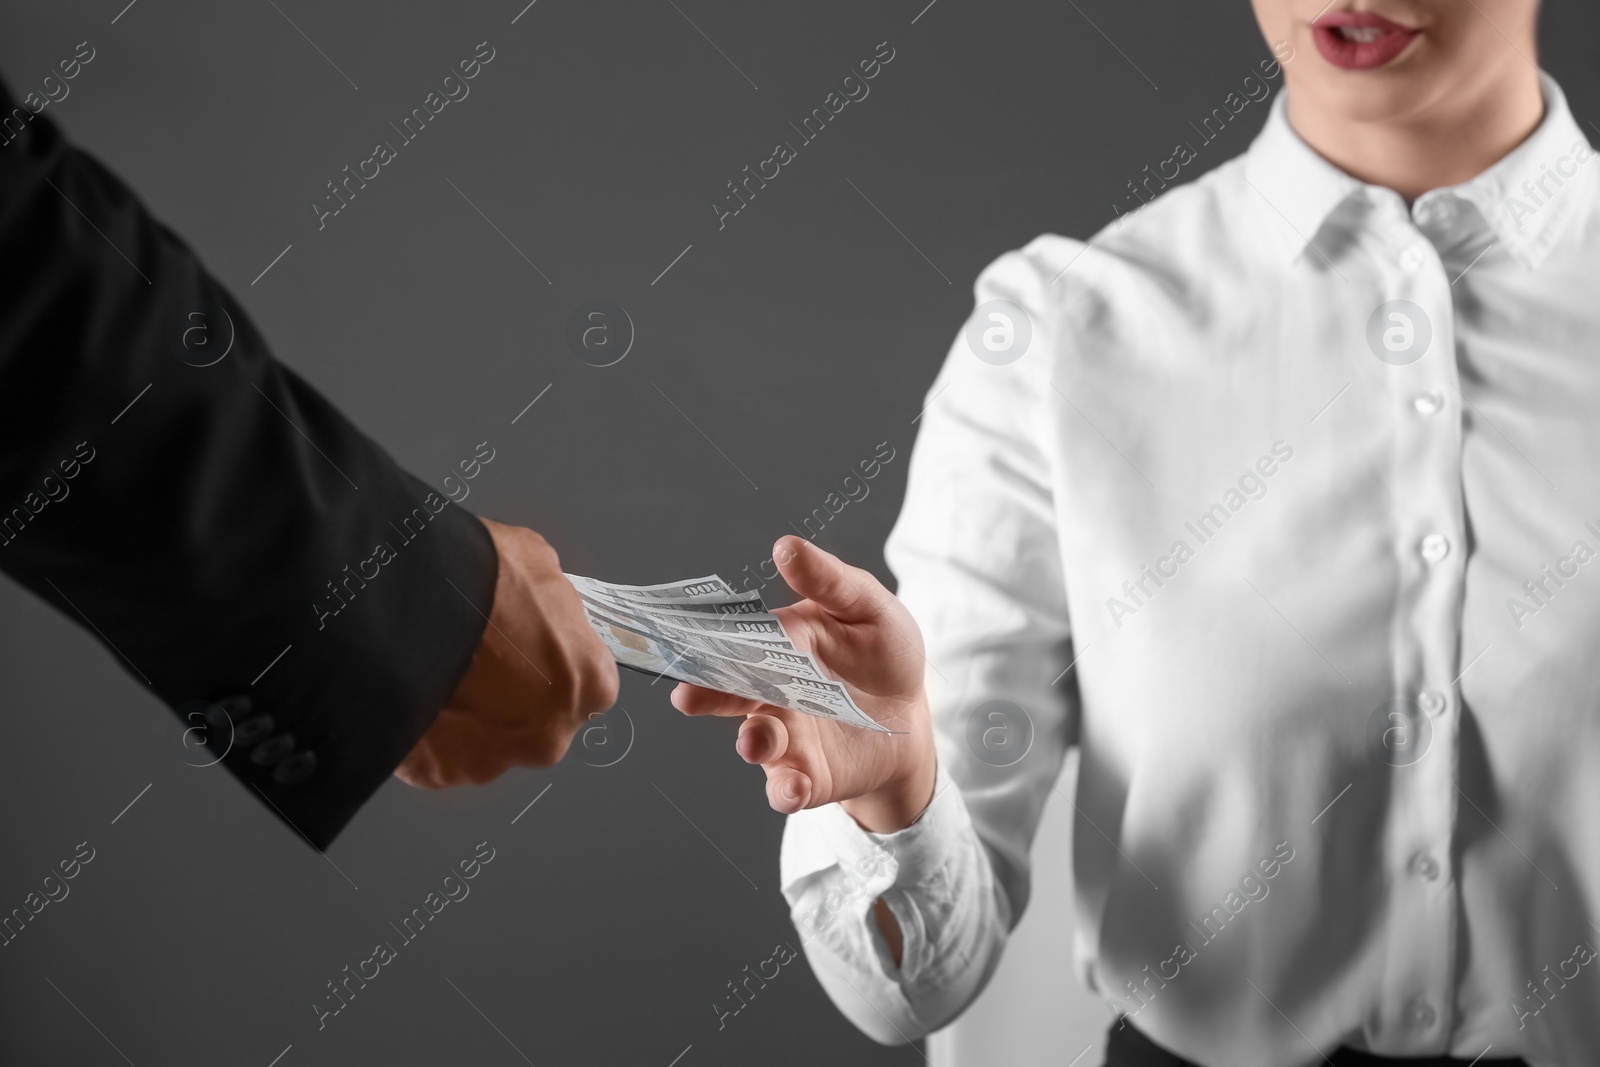 Photo of Man giving bribe money to woman on dark background, closeup